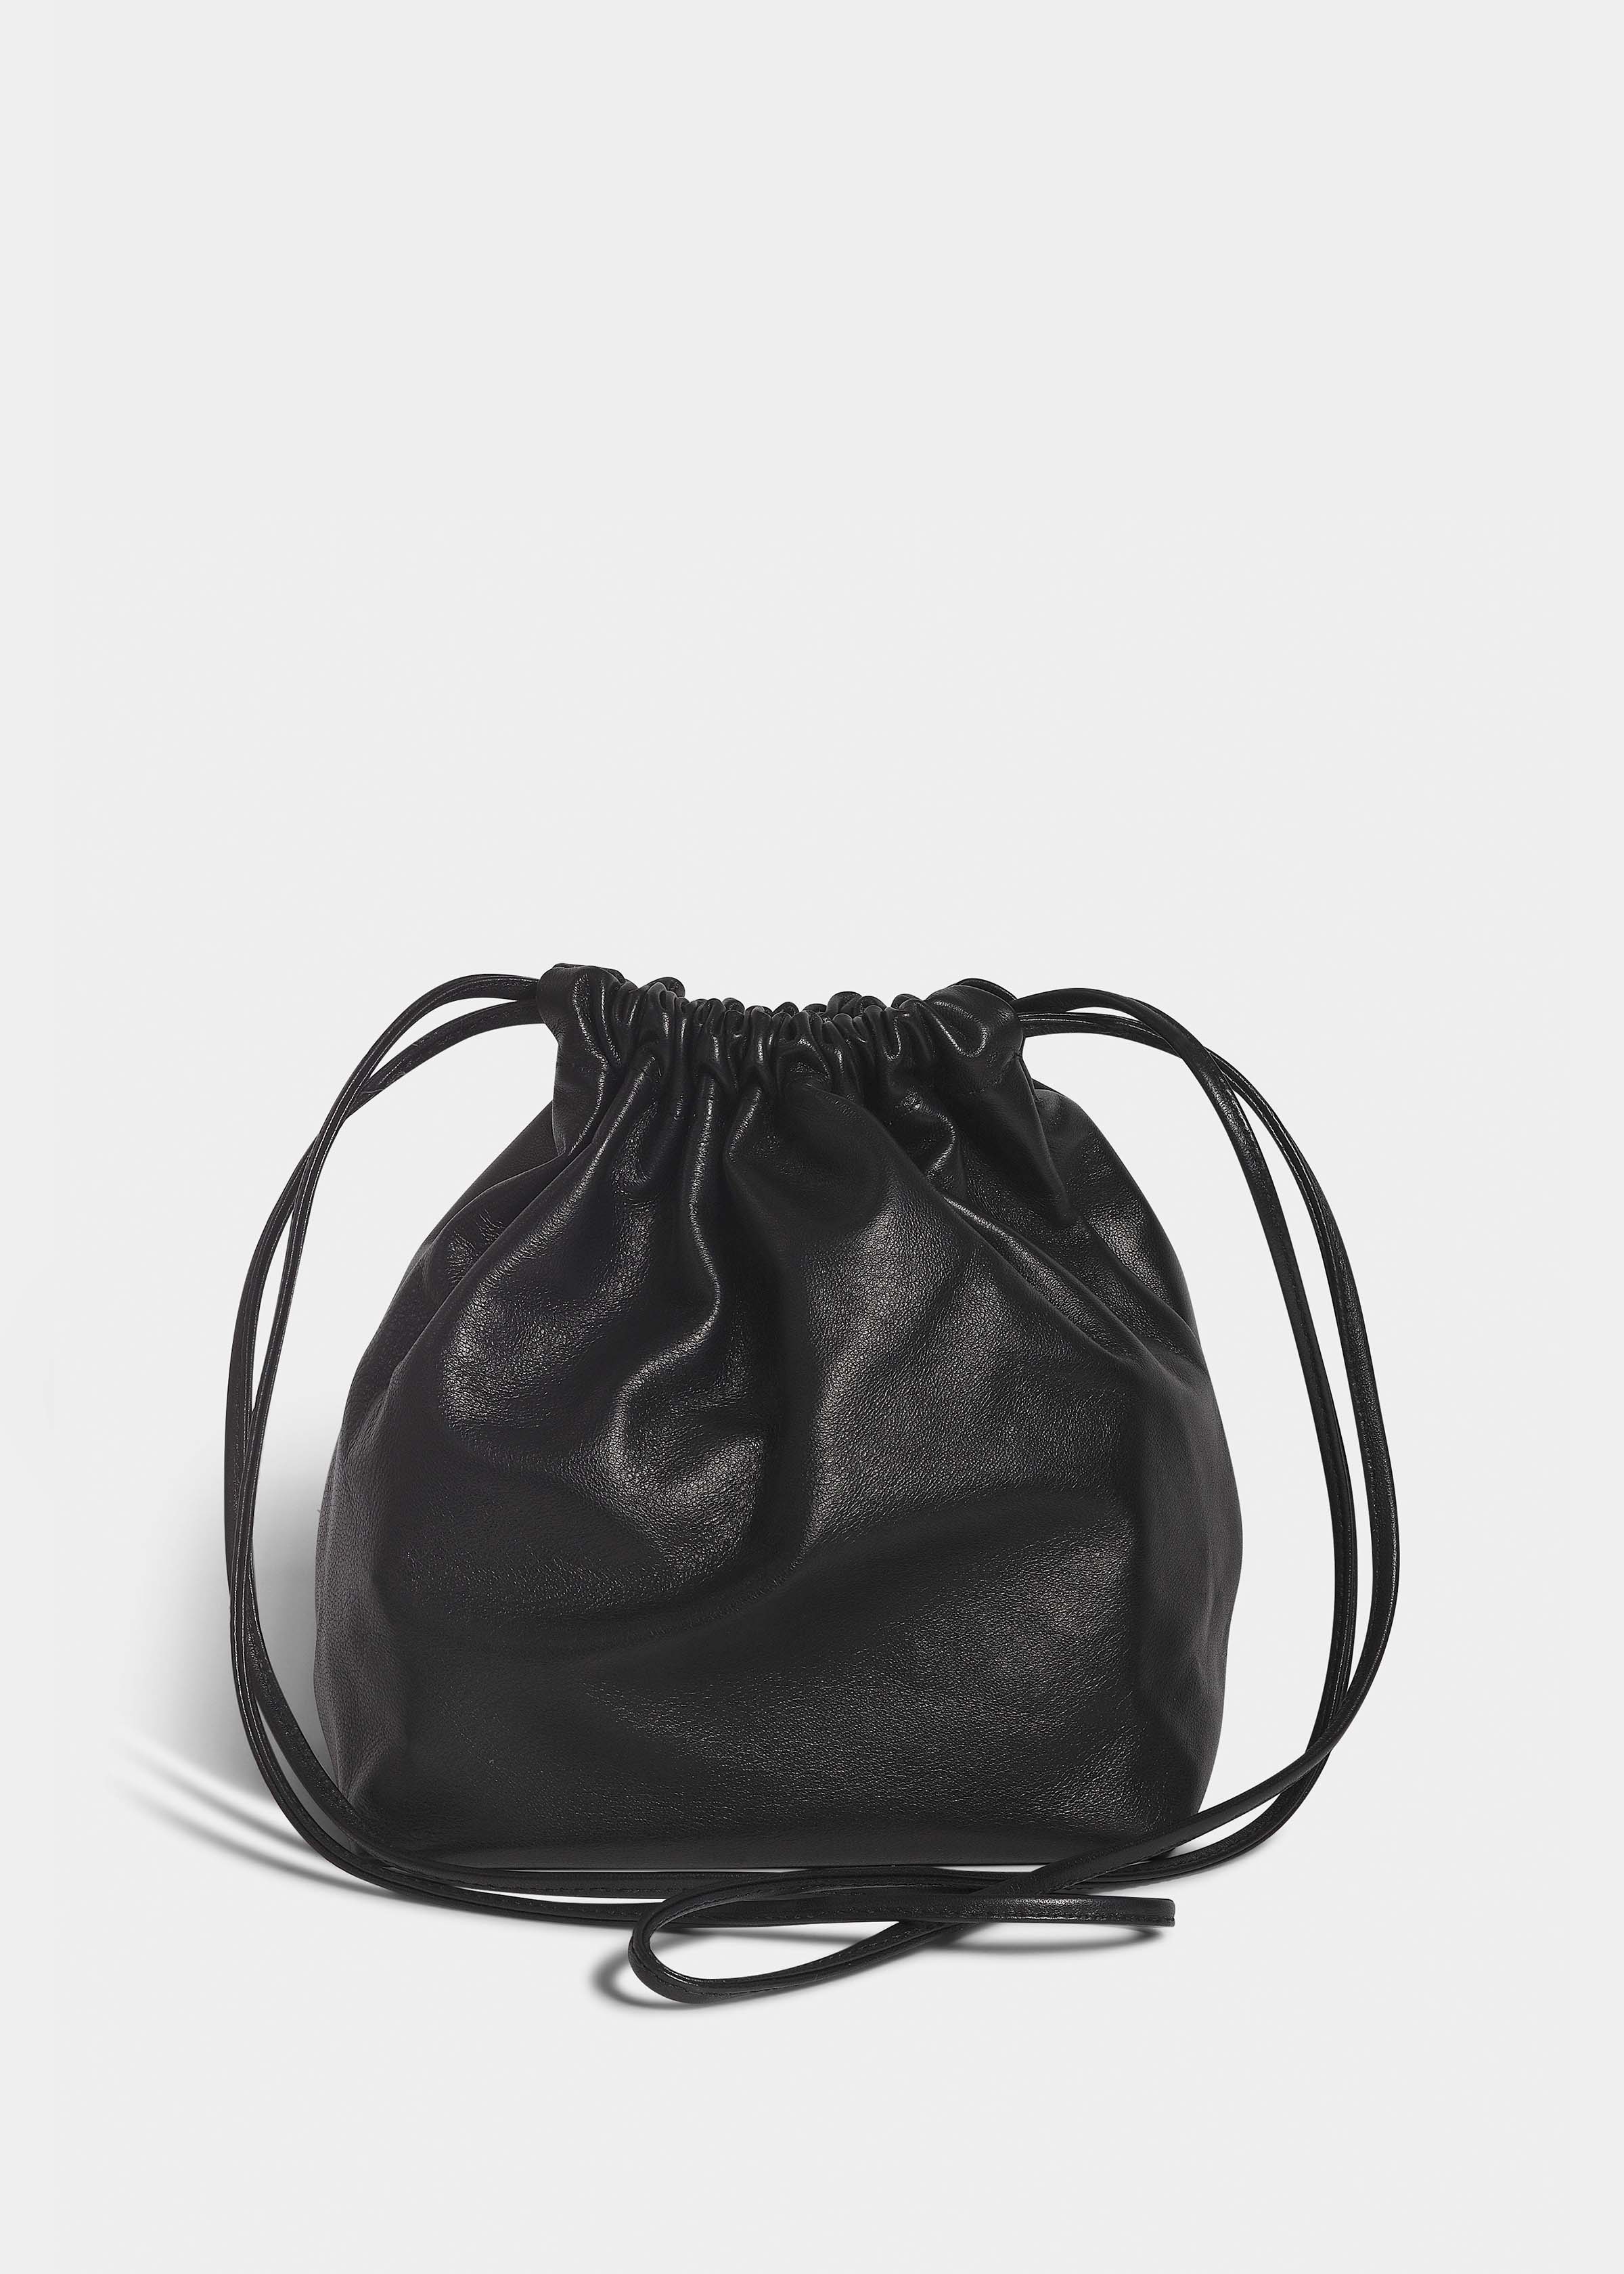 The Gather Bucket Bag in Black Vegan Leather